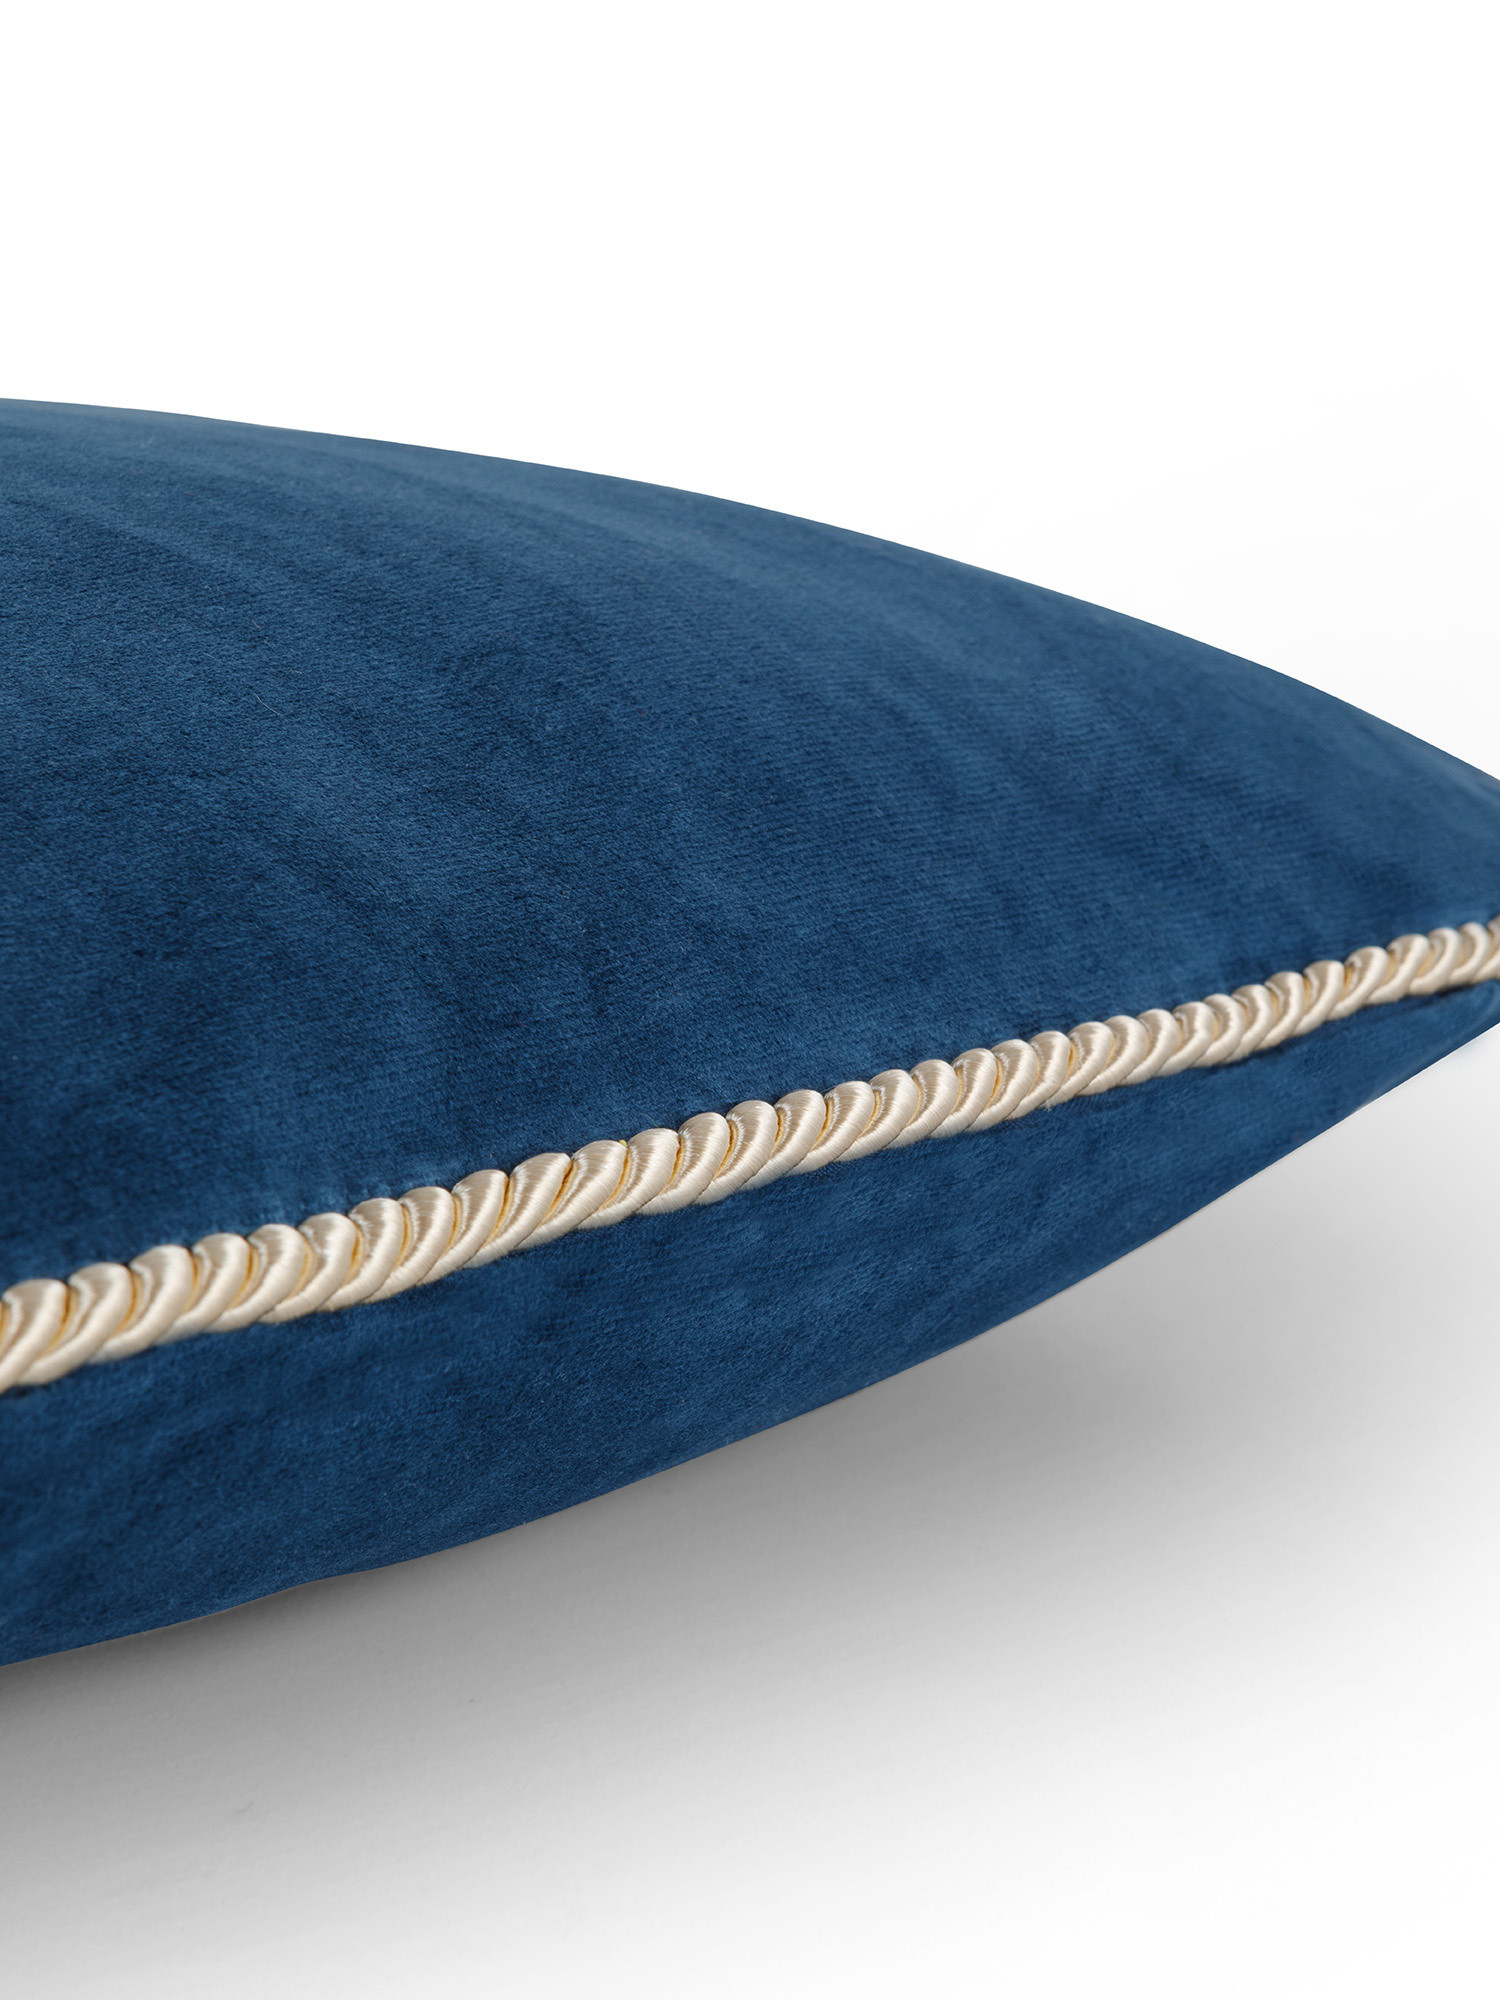 Velvet cushion 45x45cm, Dark Blue, large image number 2